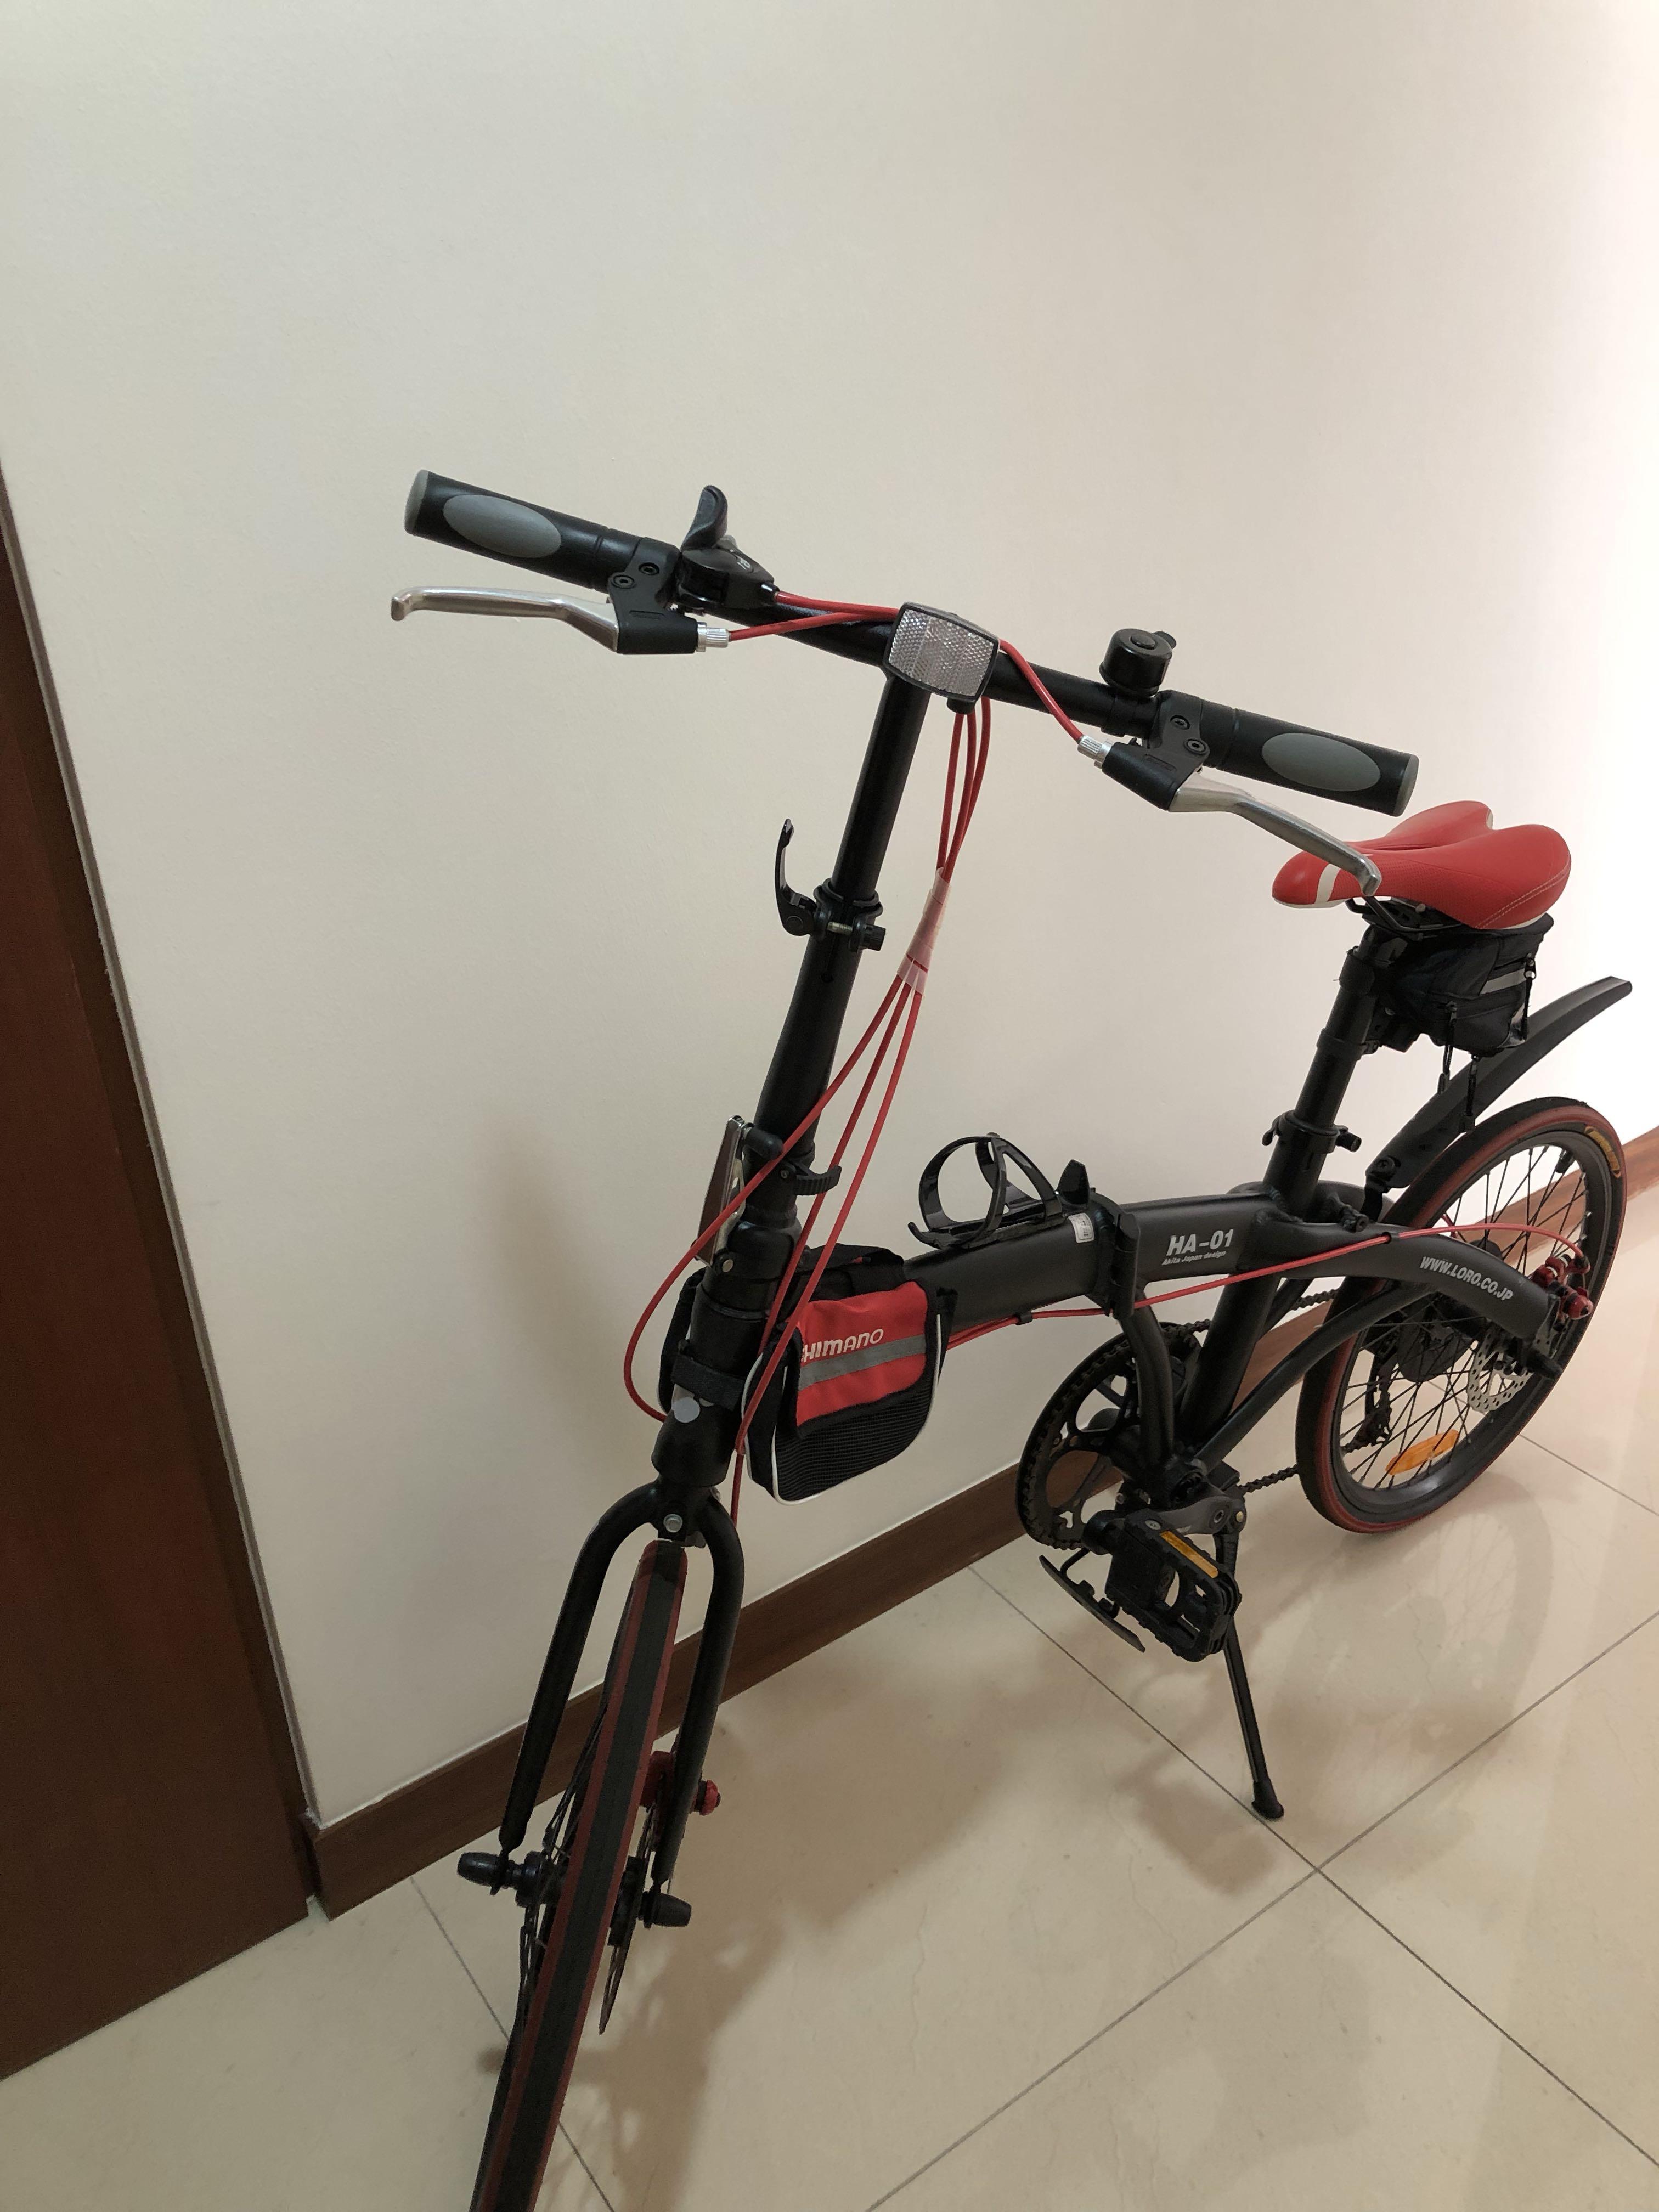 hasaki folding bike